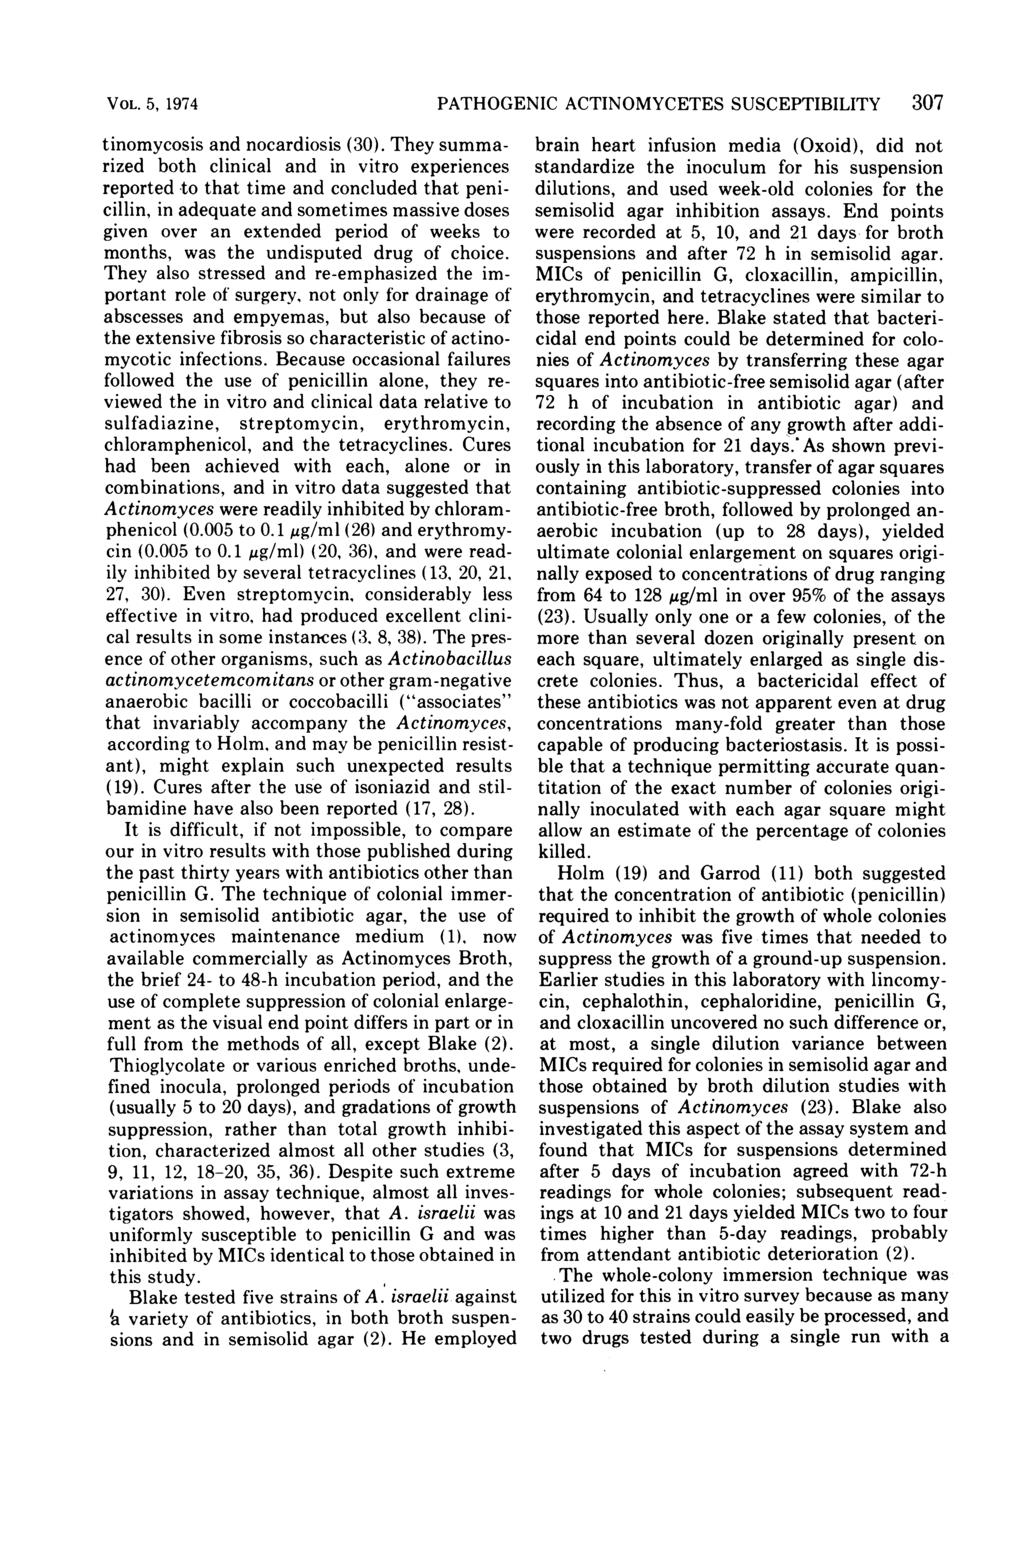 VOL. 5, 1974 tinomycosis and nocardiosis (30).